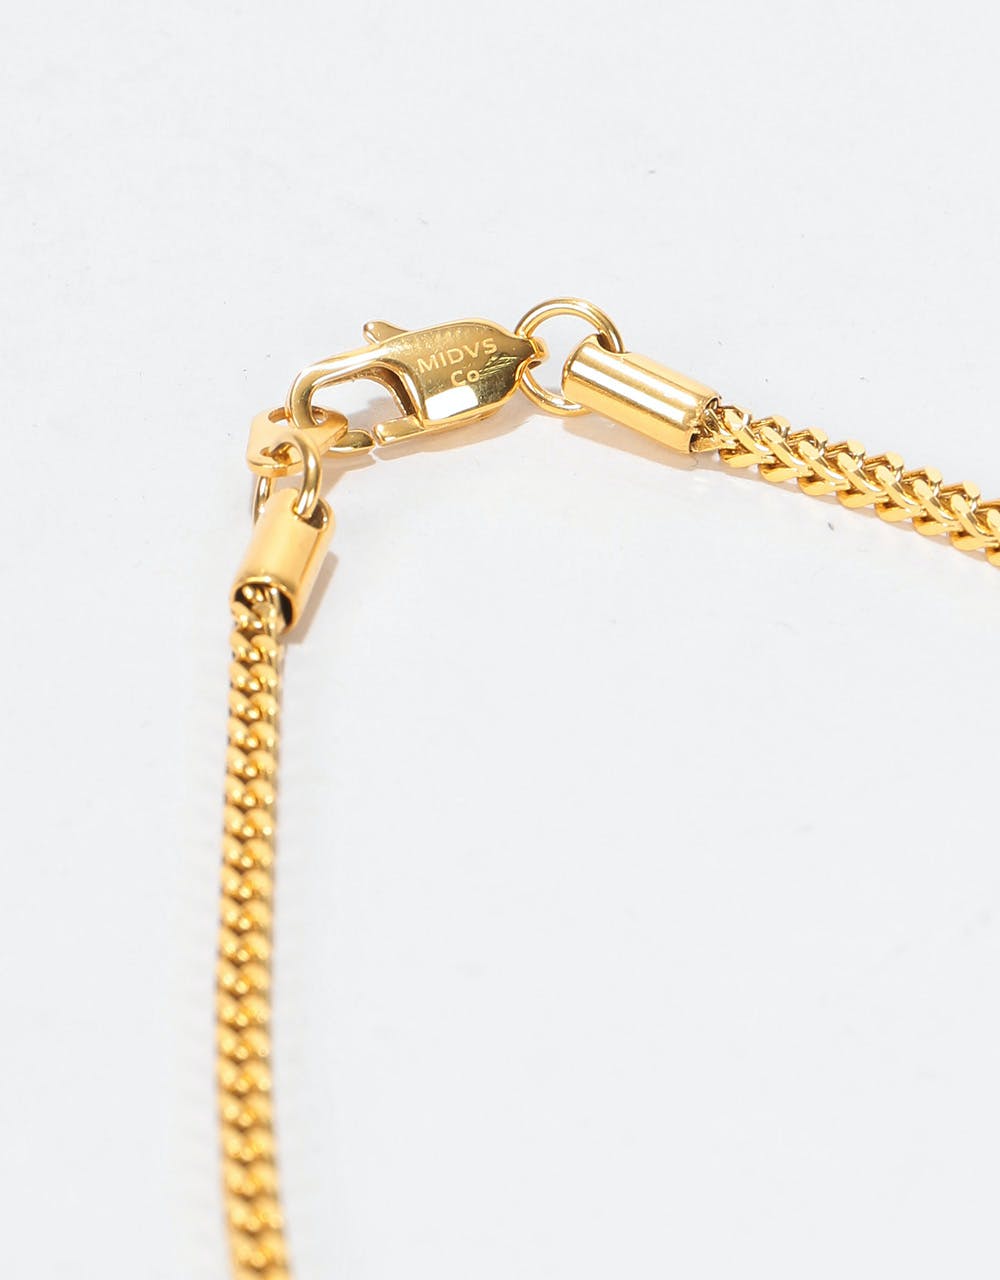 Midvs Co 18K Gold Plated Prayer Hands Necklace - Gold